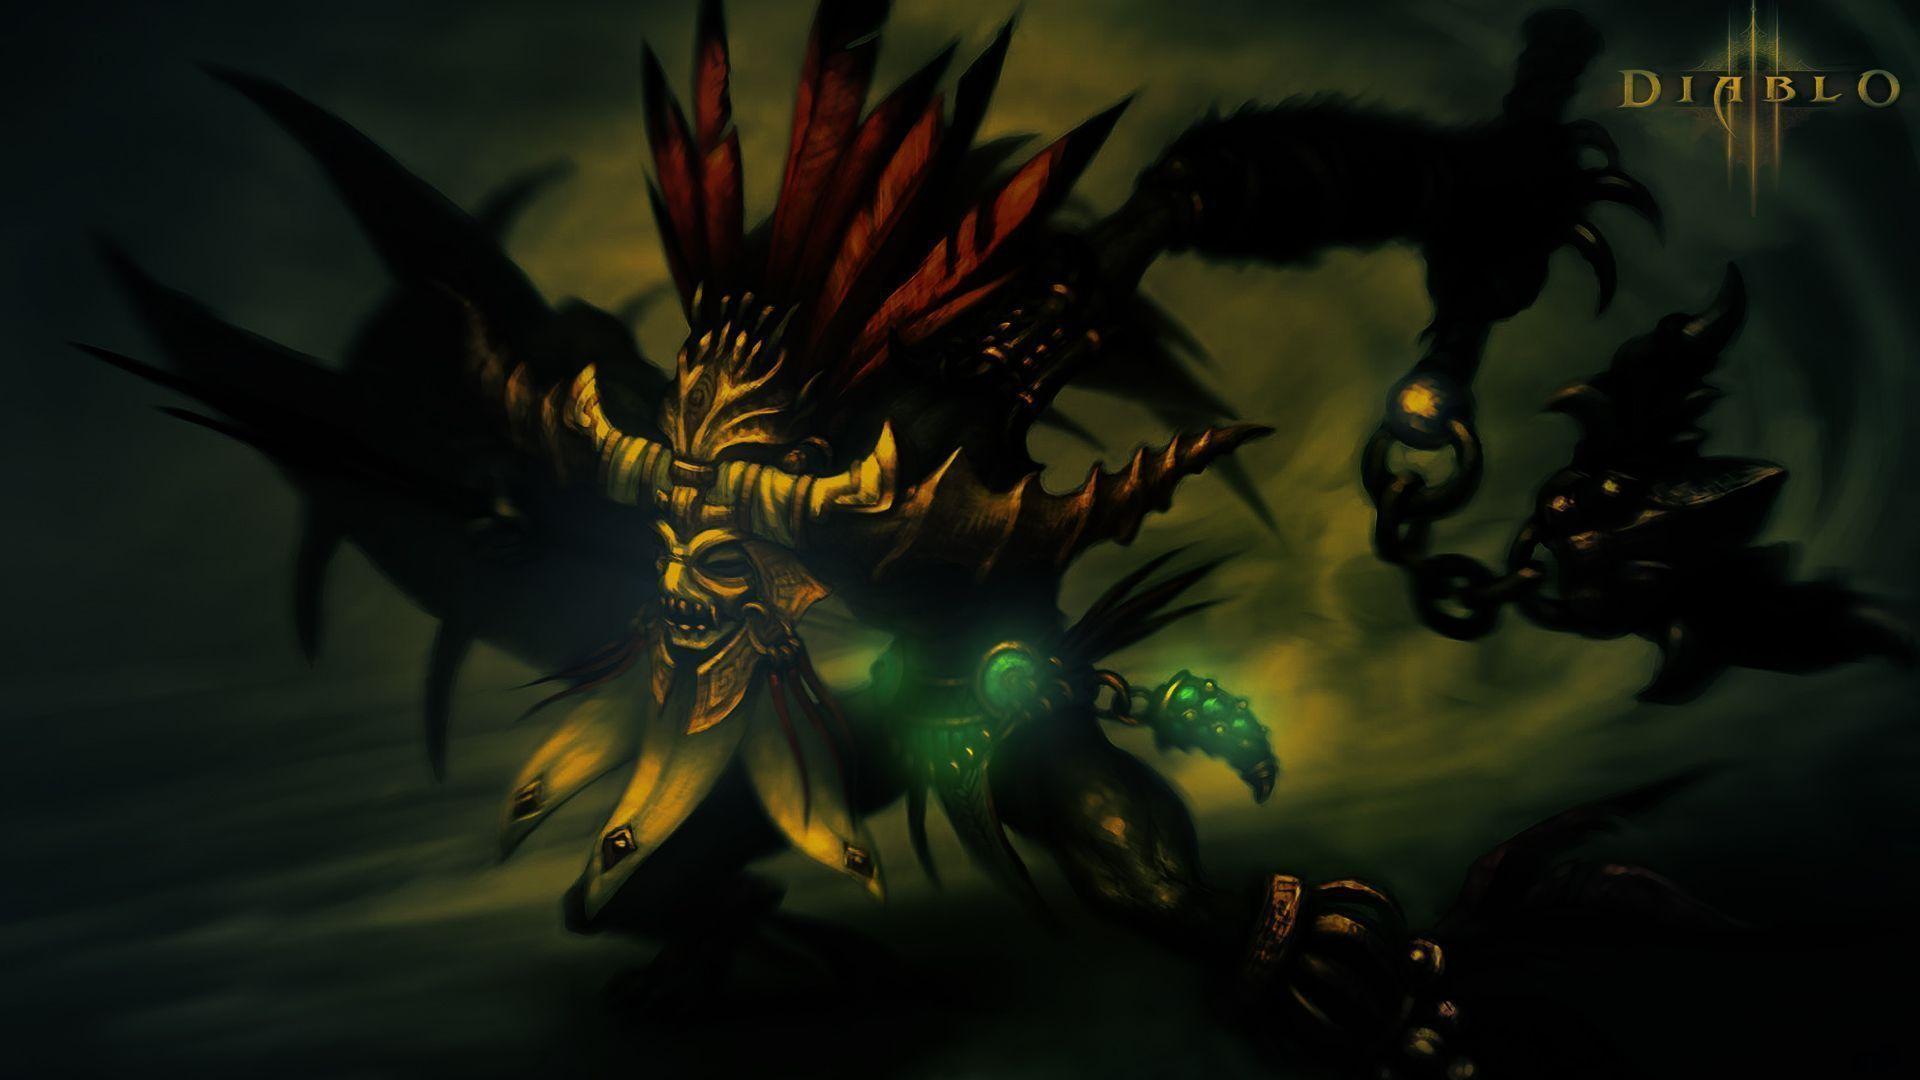 Diablo III: the shaman wallpaper and image